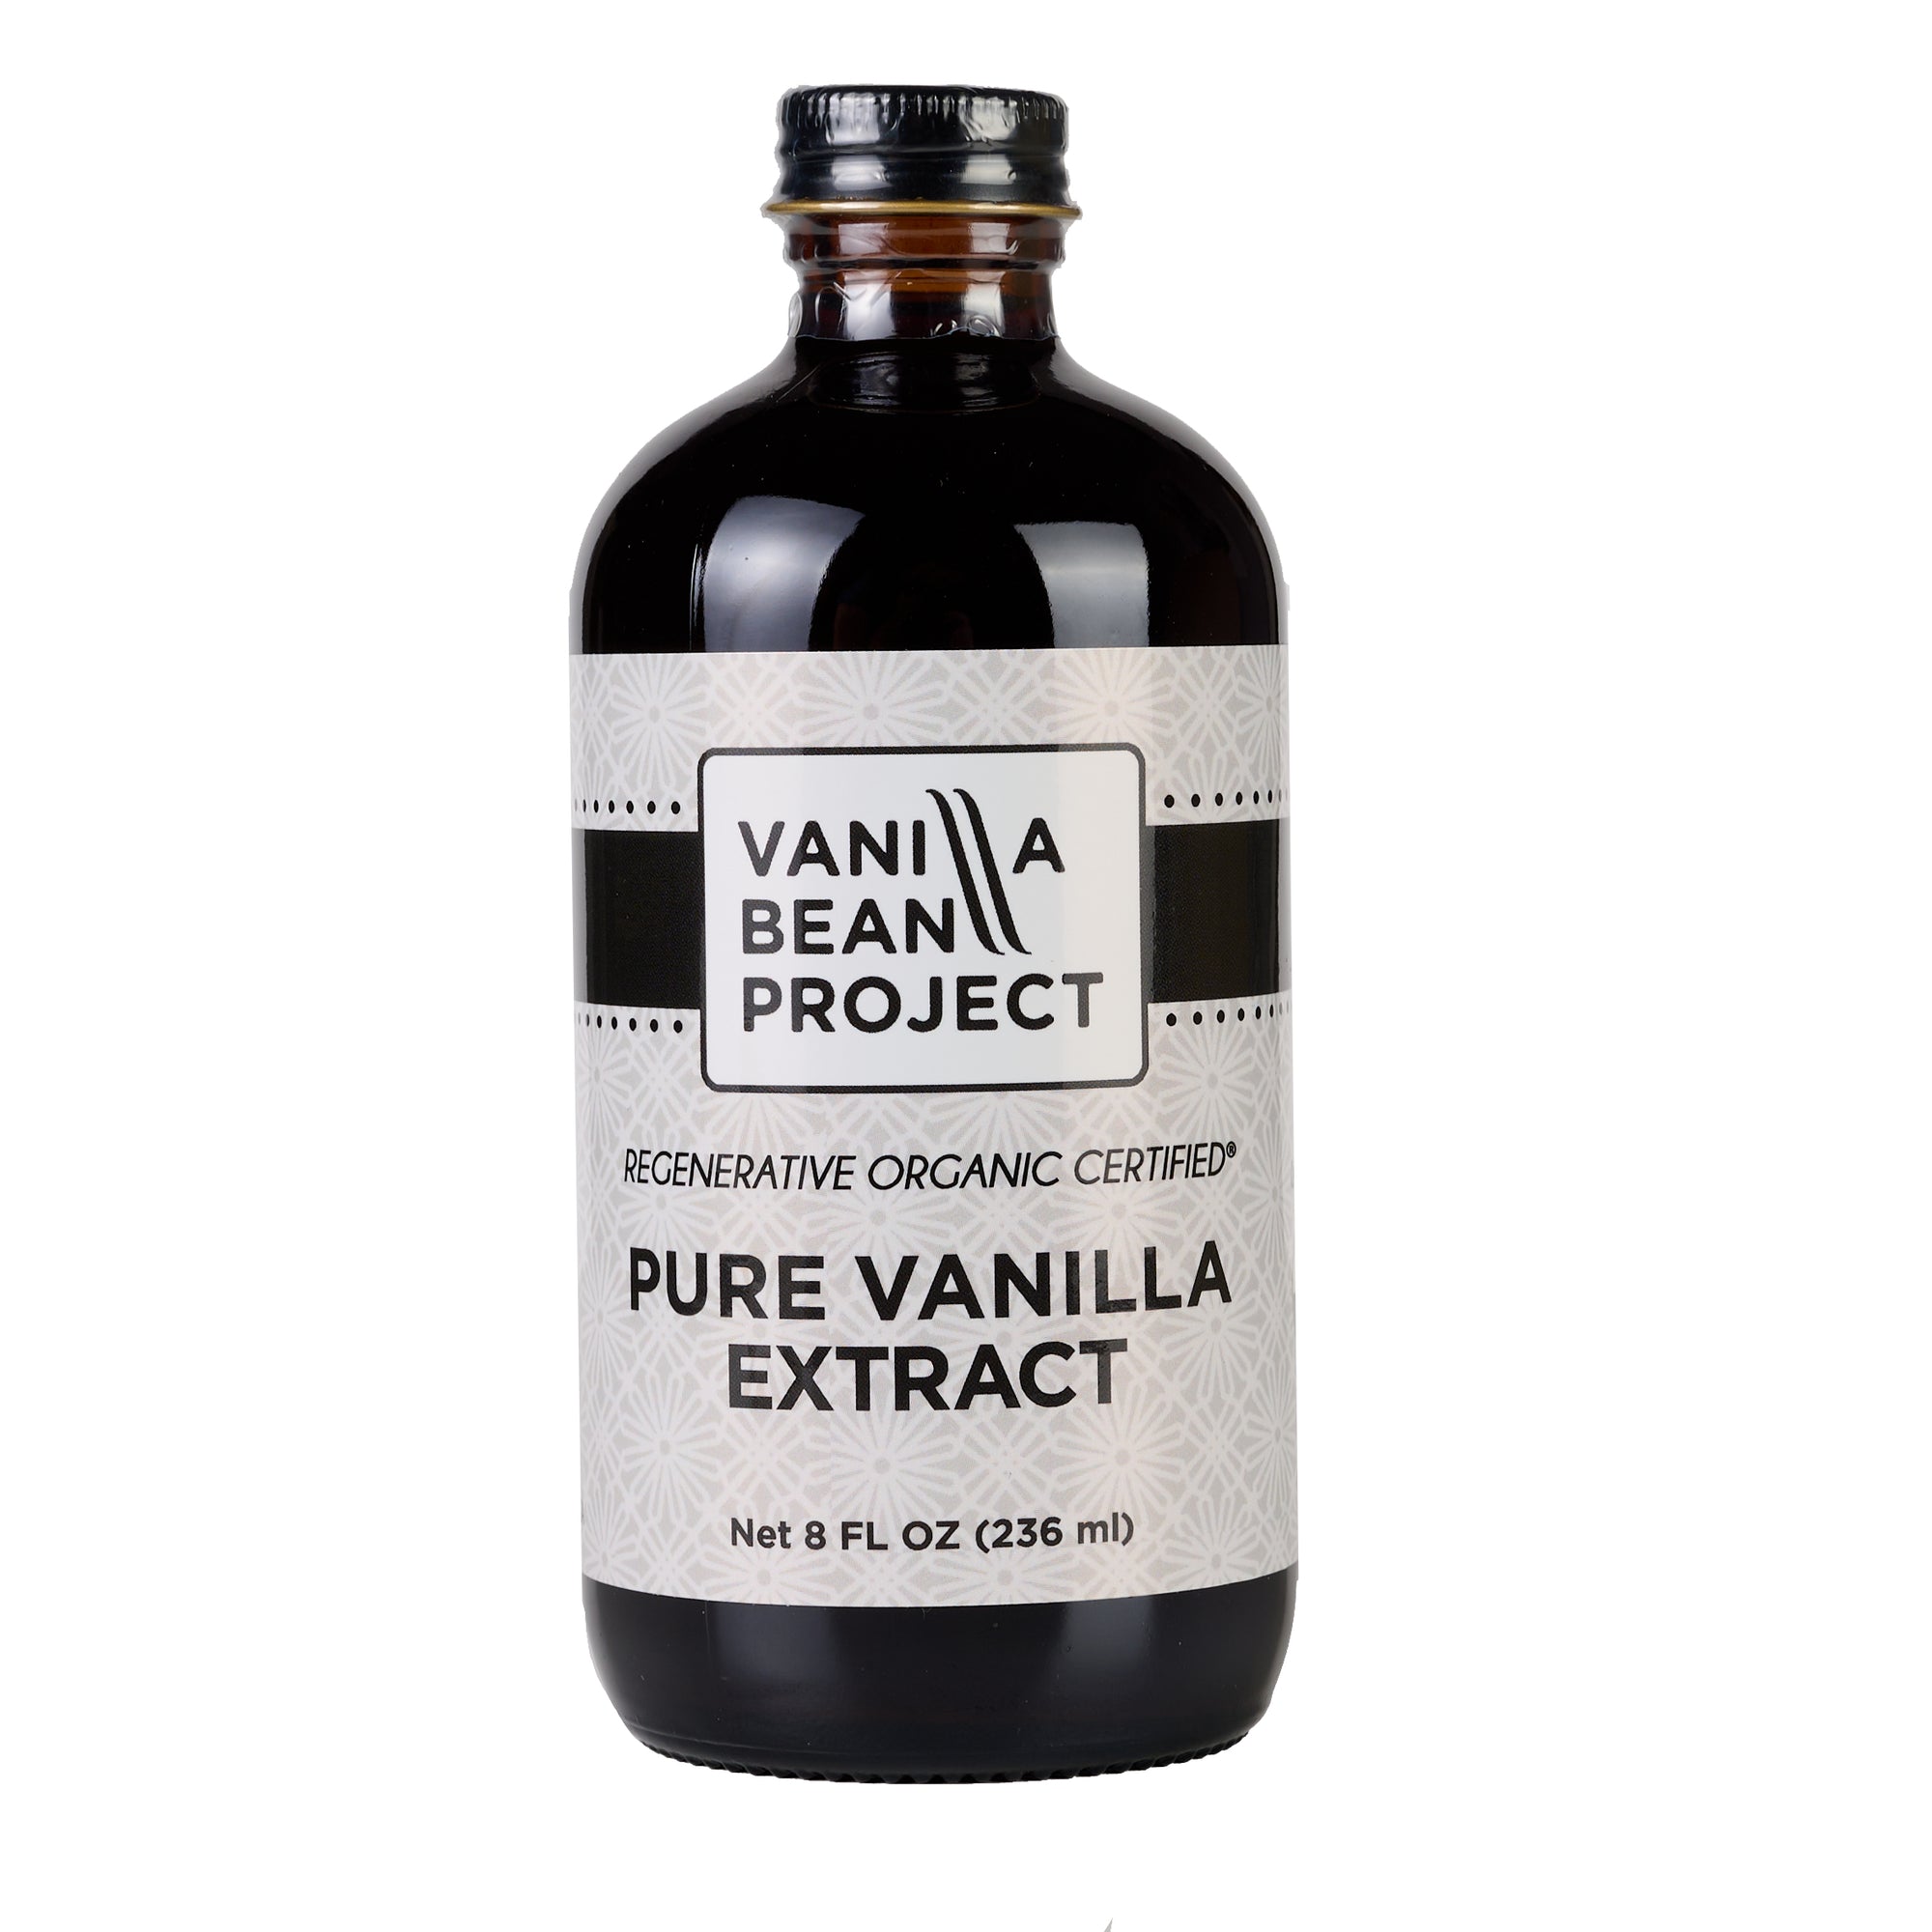 Regenerative Organic Certified Vanilla Extract